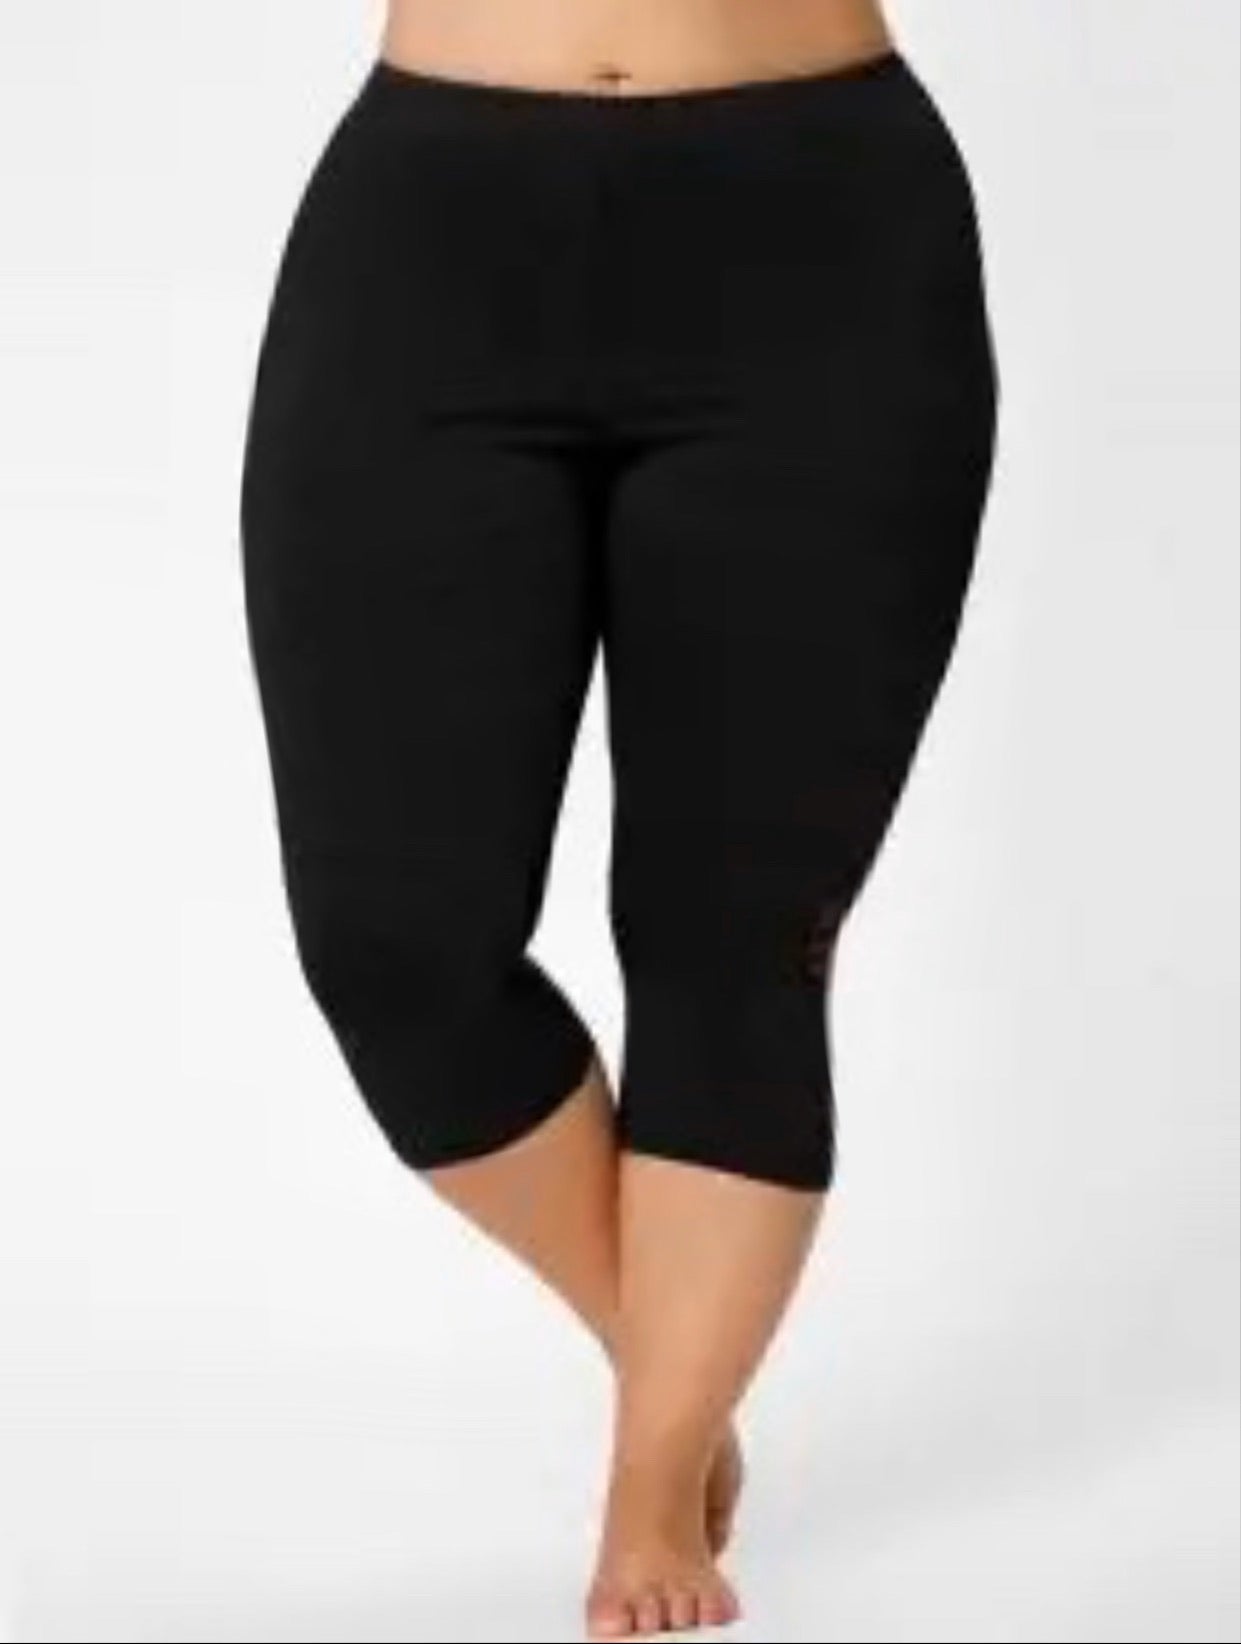 LEG-72 {Spend The Day} Black One Size Capri Leggings PLUS SIZE 3X – Curvy  Boutique Plus Size Clothing